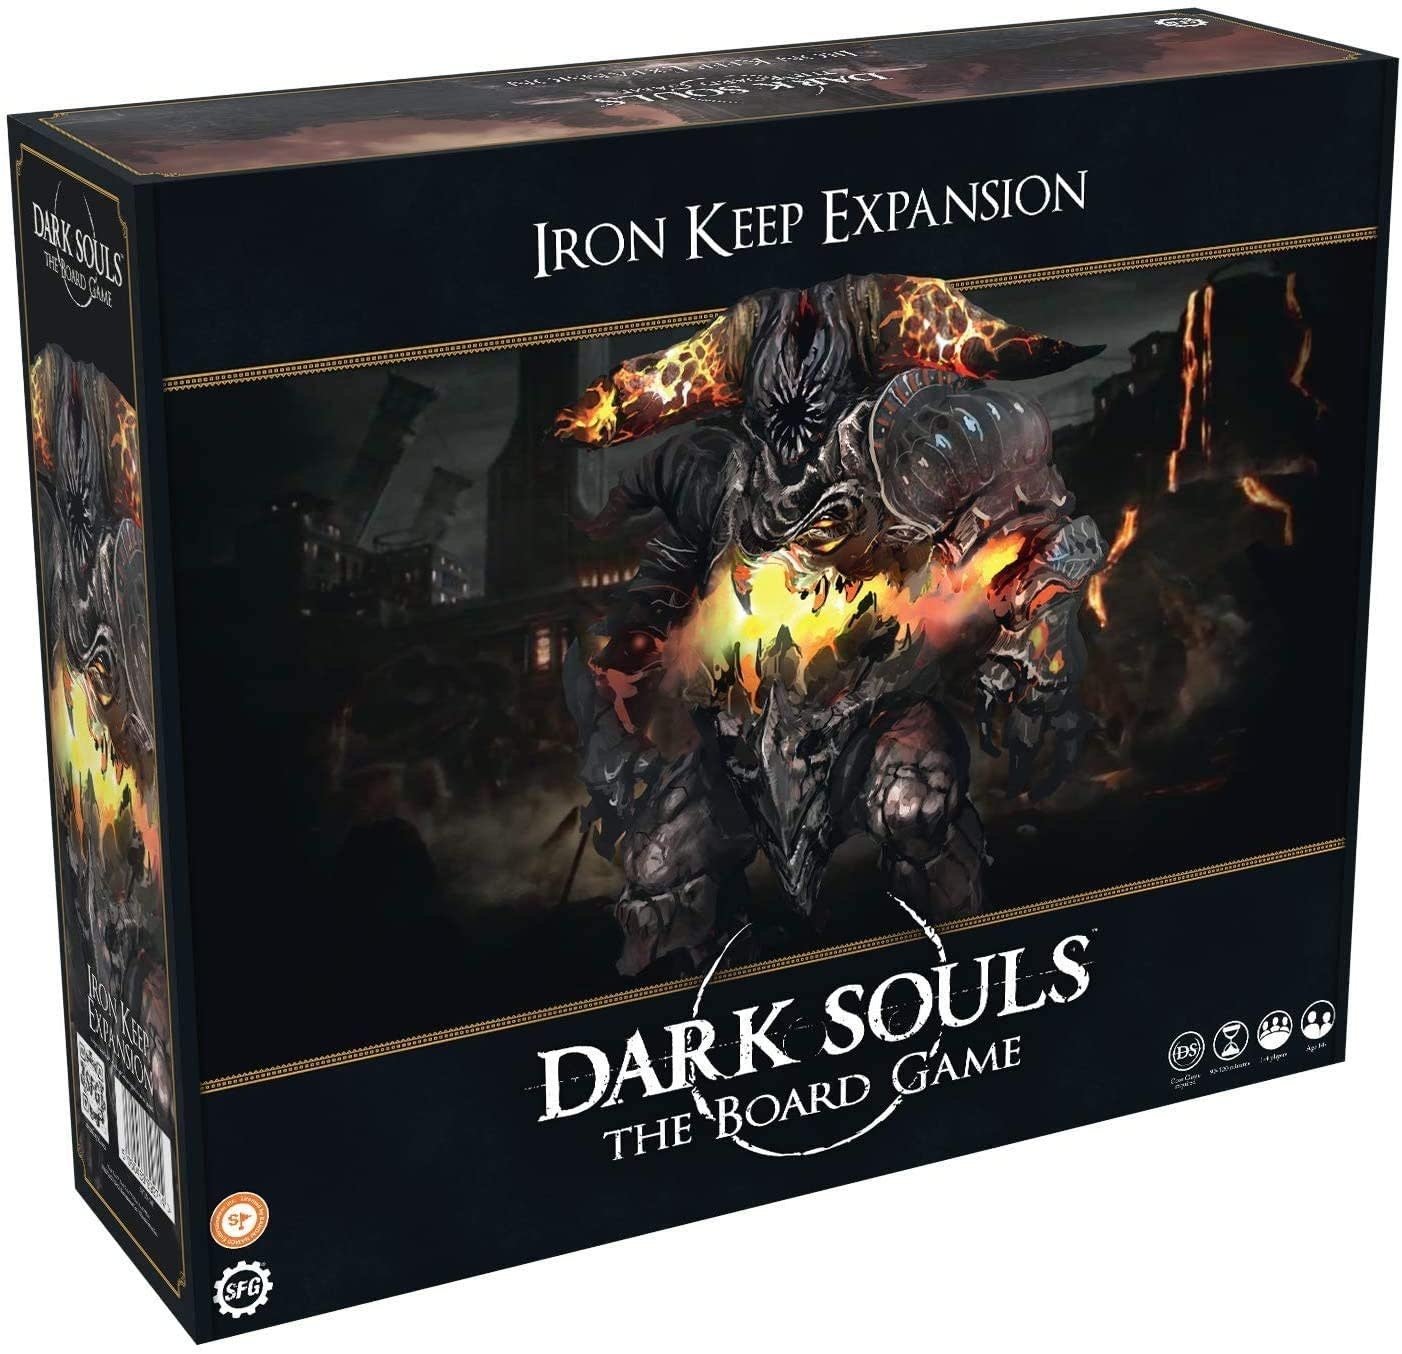 Steamforged Dark Souls board game: Iron Keep Expansion